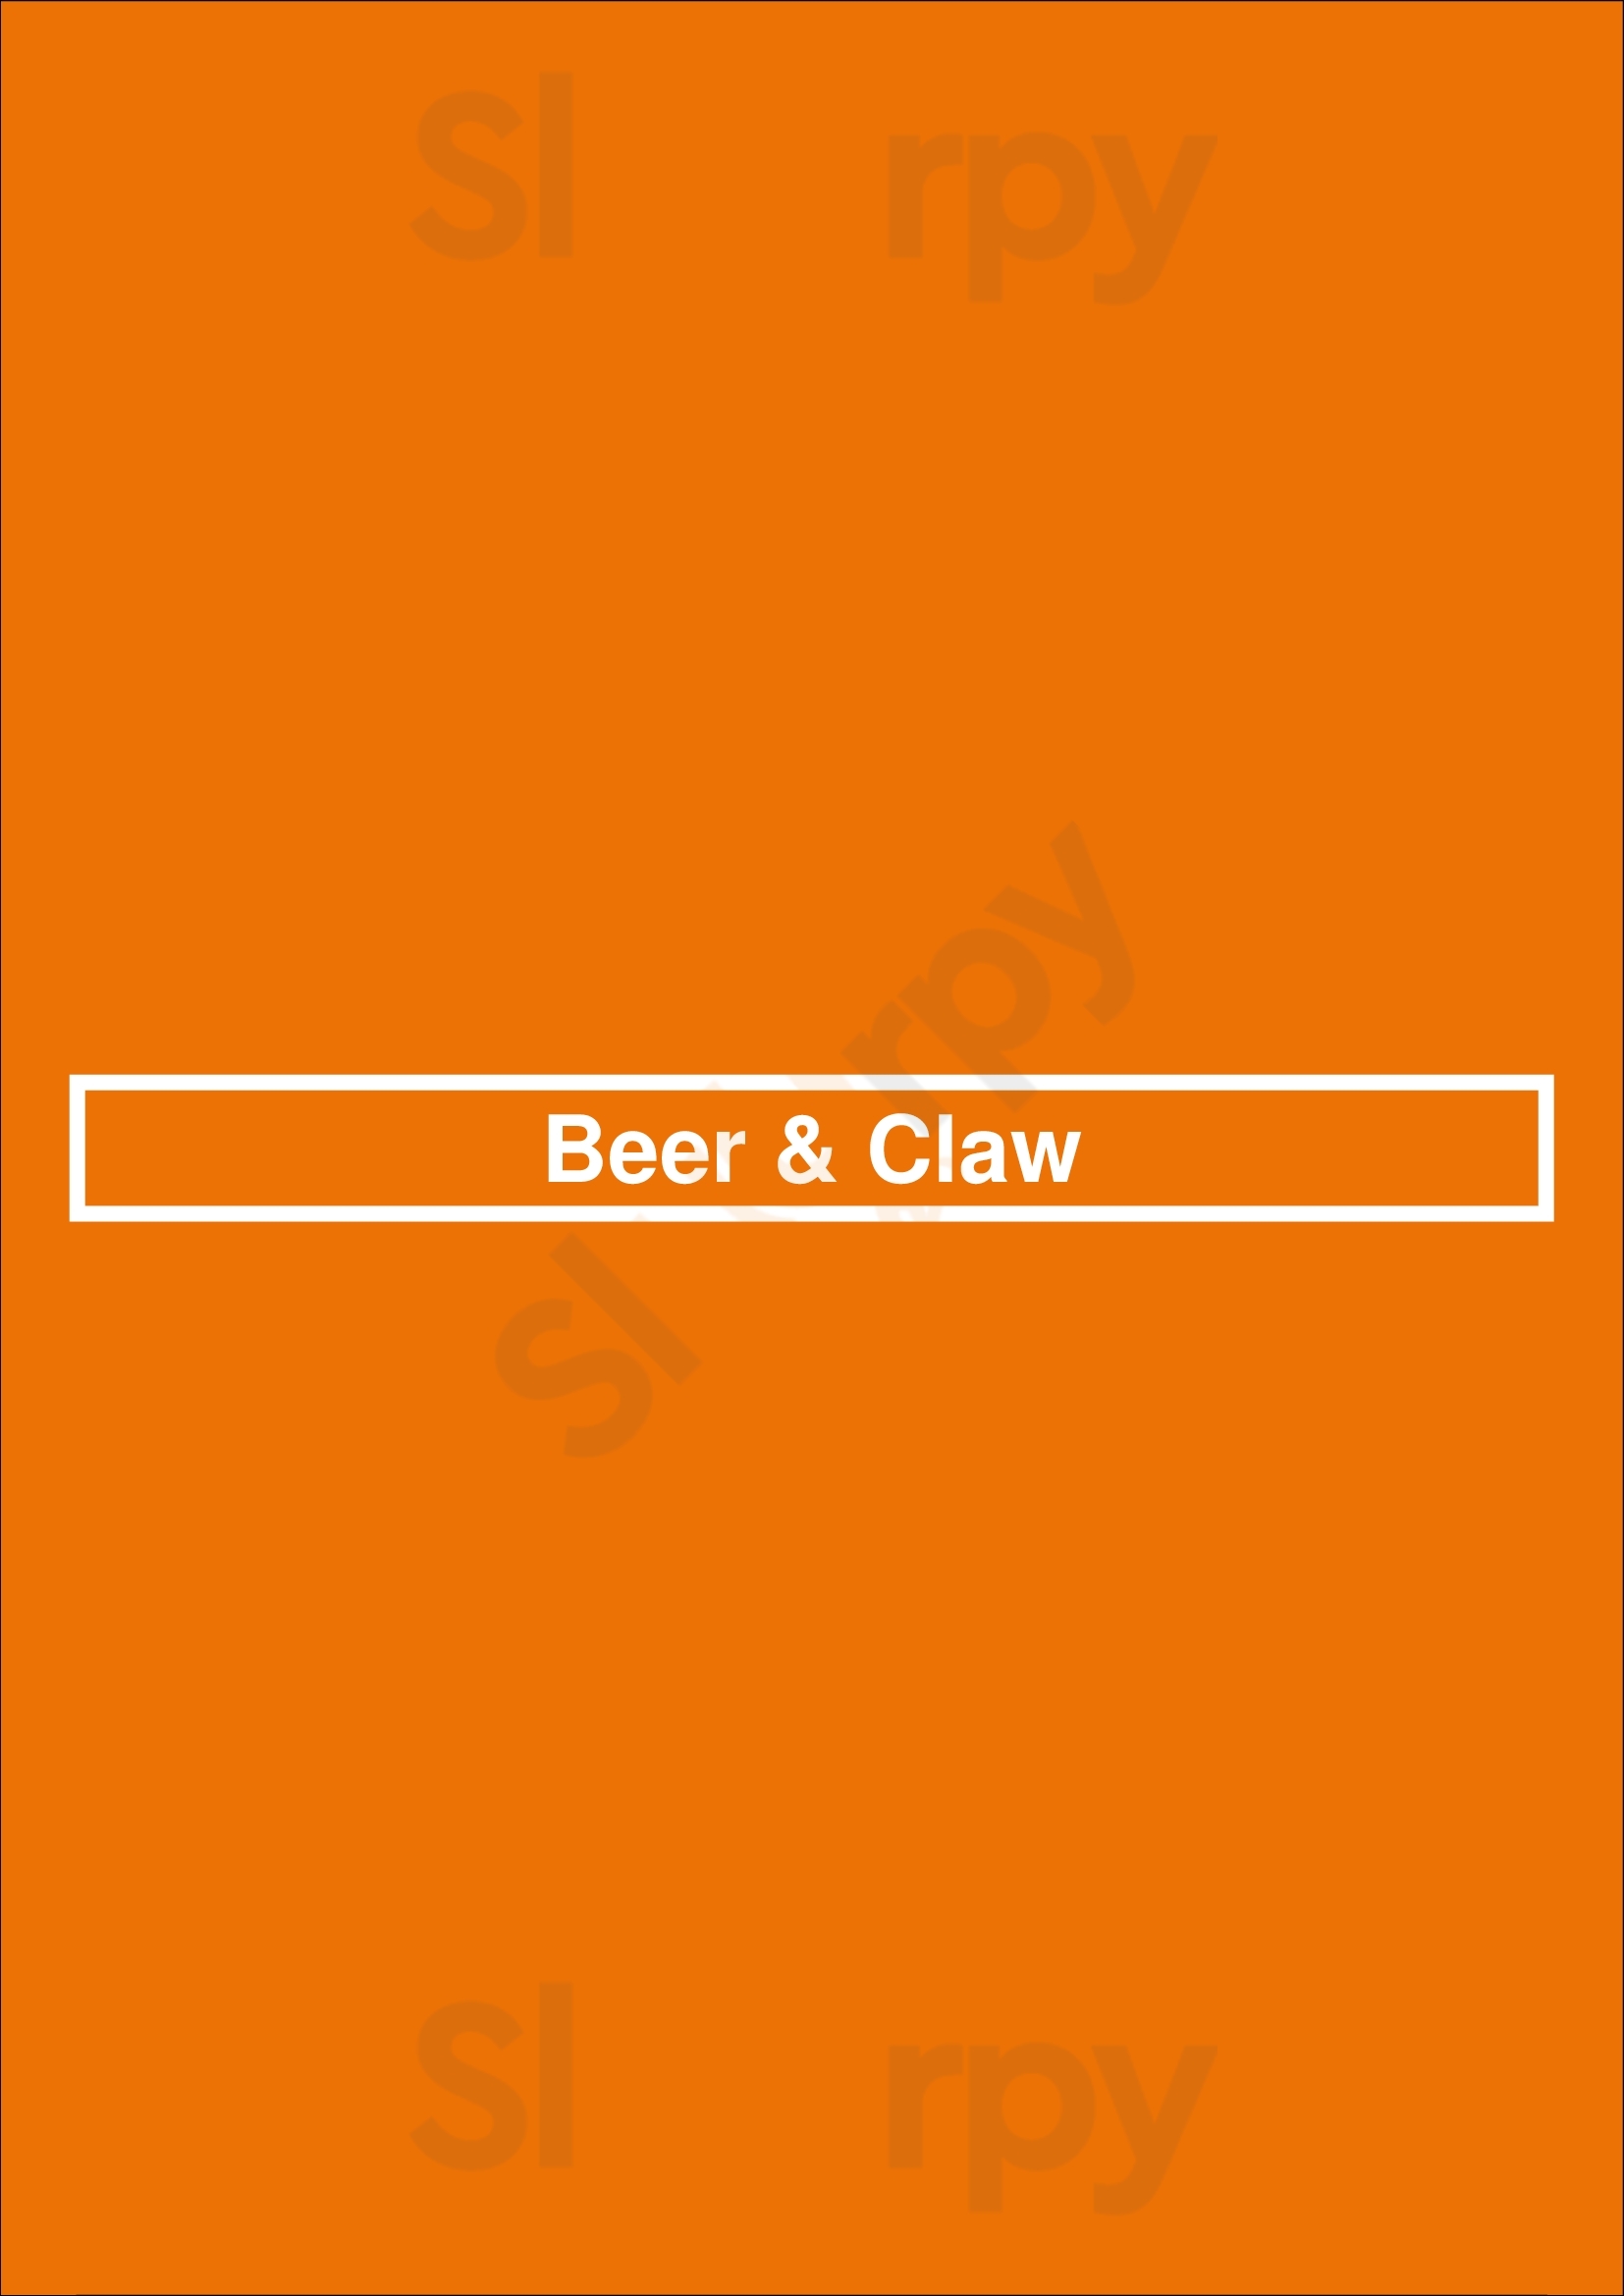 Beer & Claw Pasadena Menu - 1